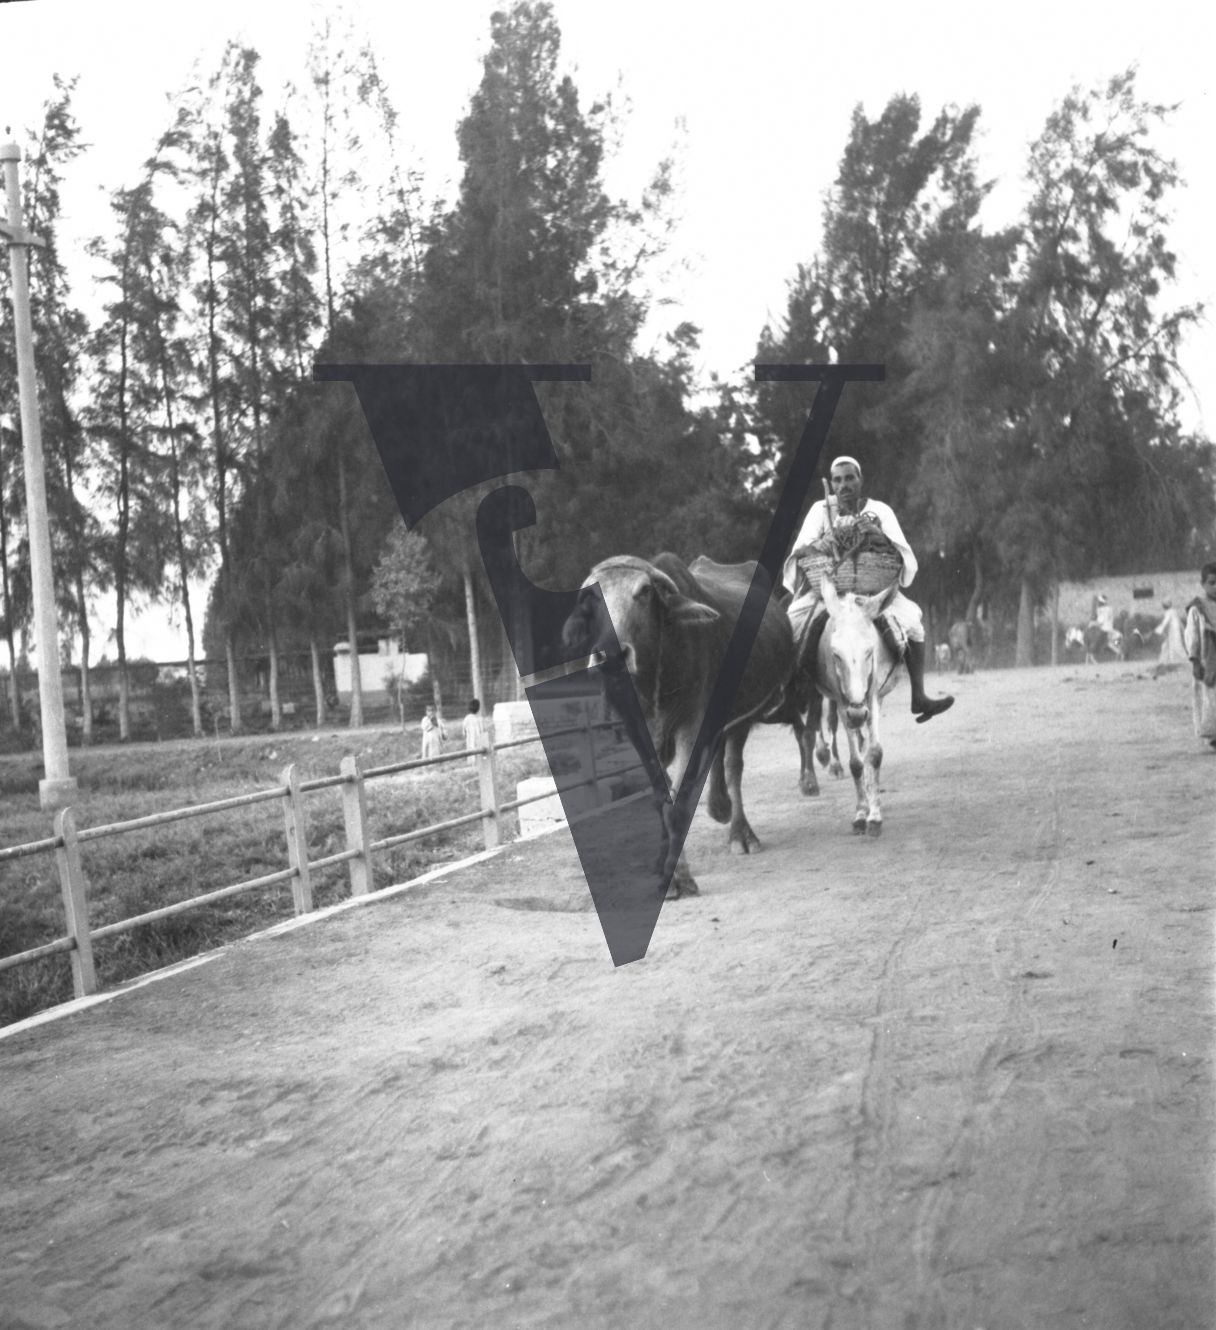 Harrania, Egypt, man on horse with cow.